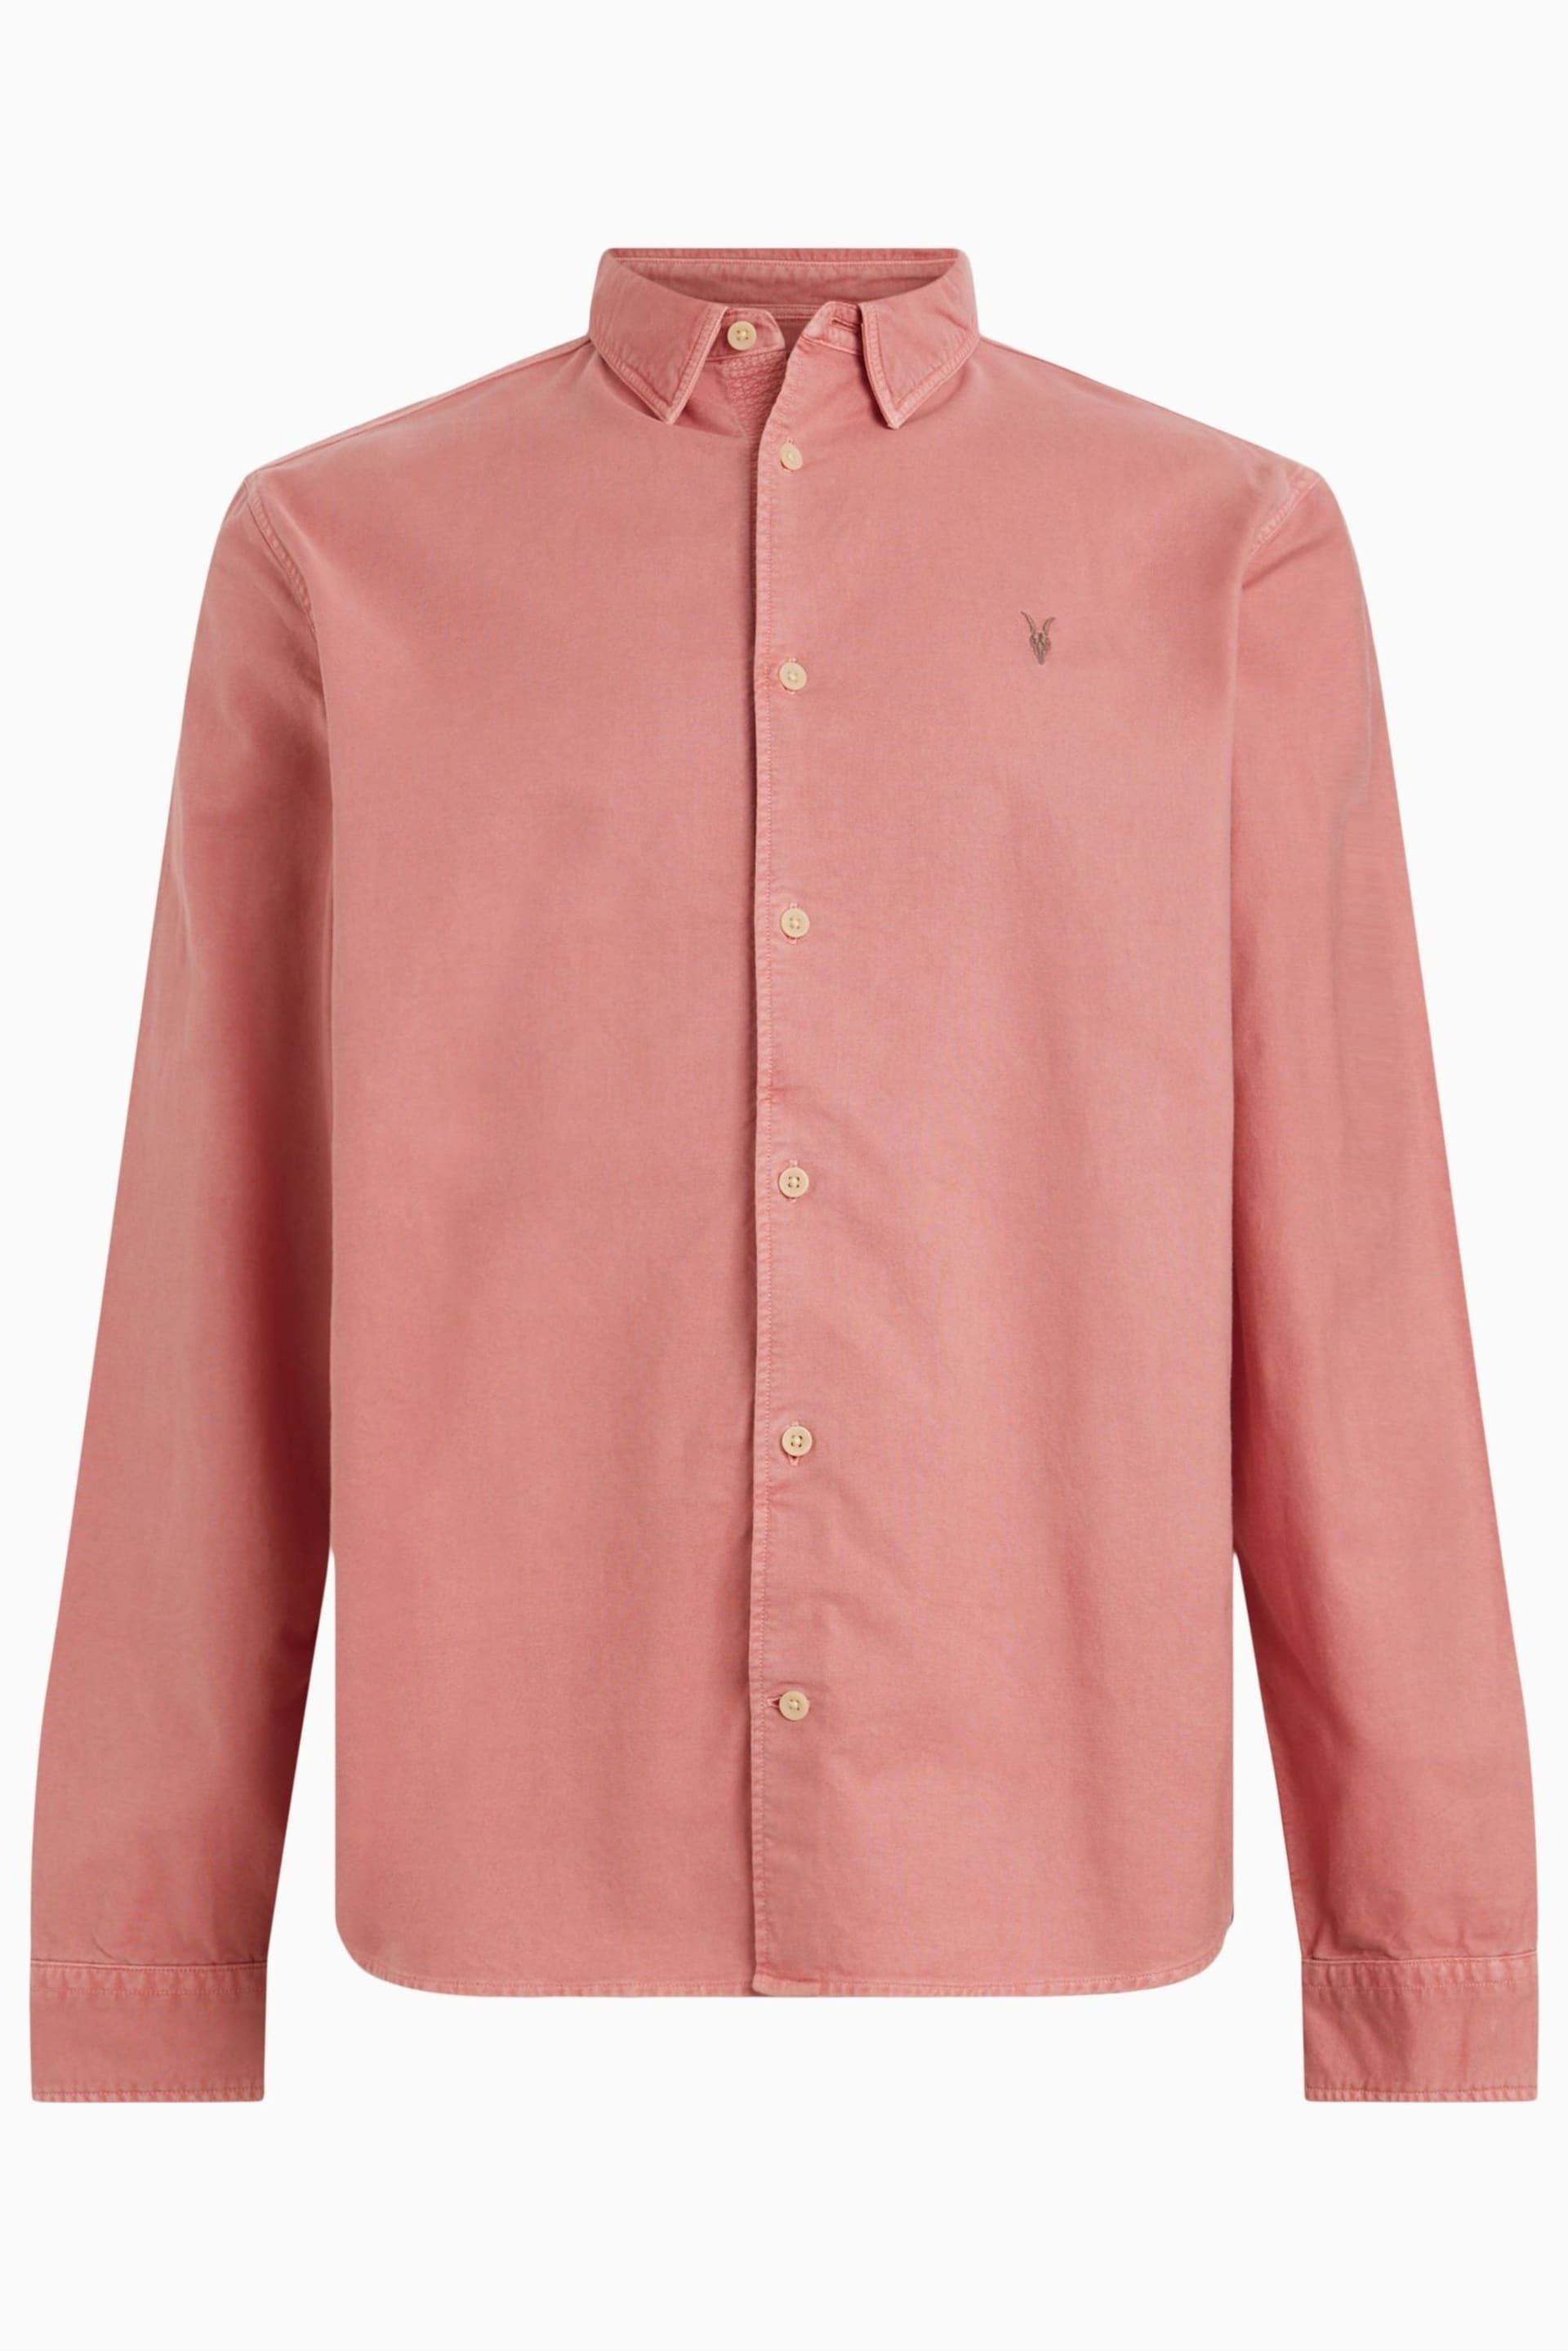 AllSaints Pink Hermosa Shirt - Image 7 of 7